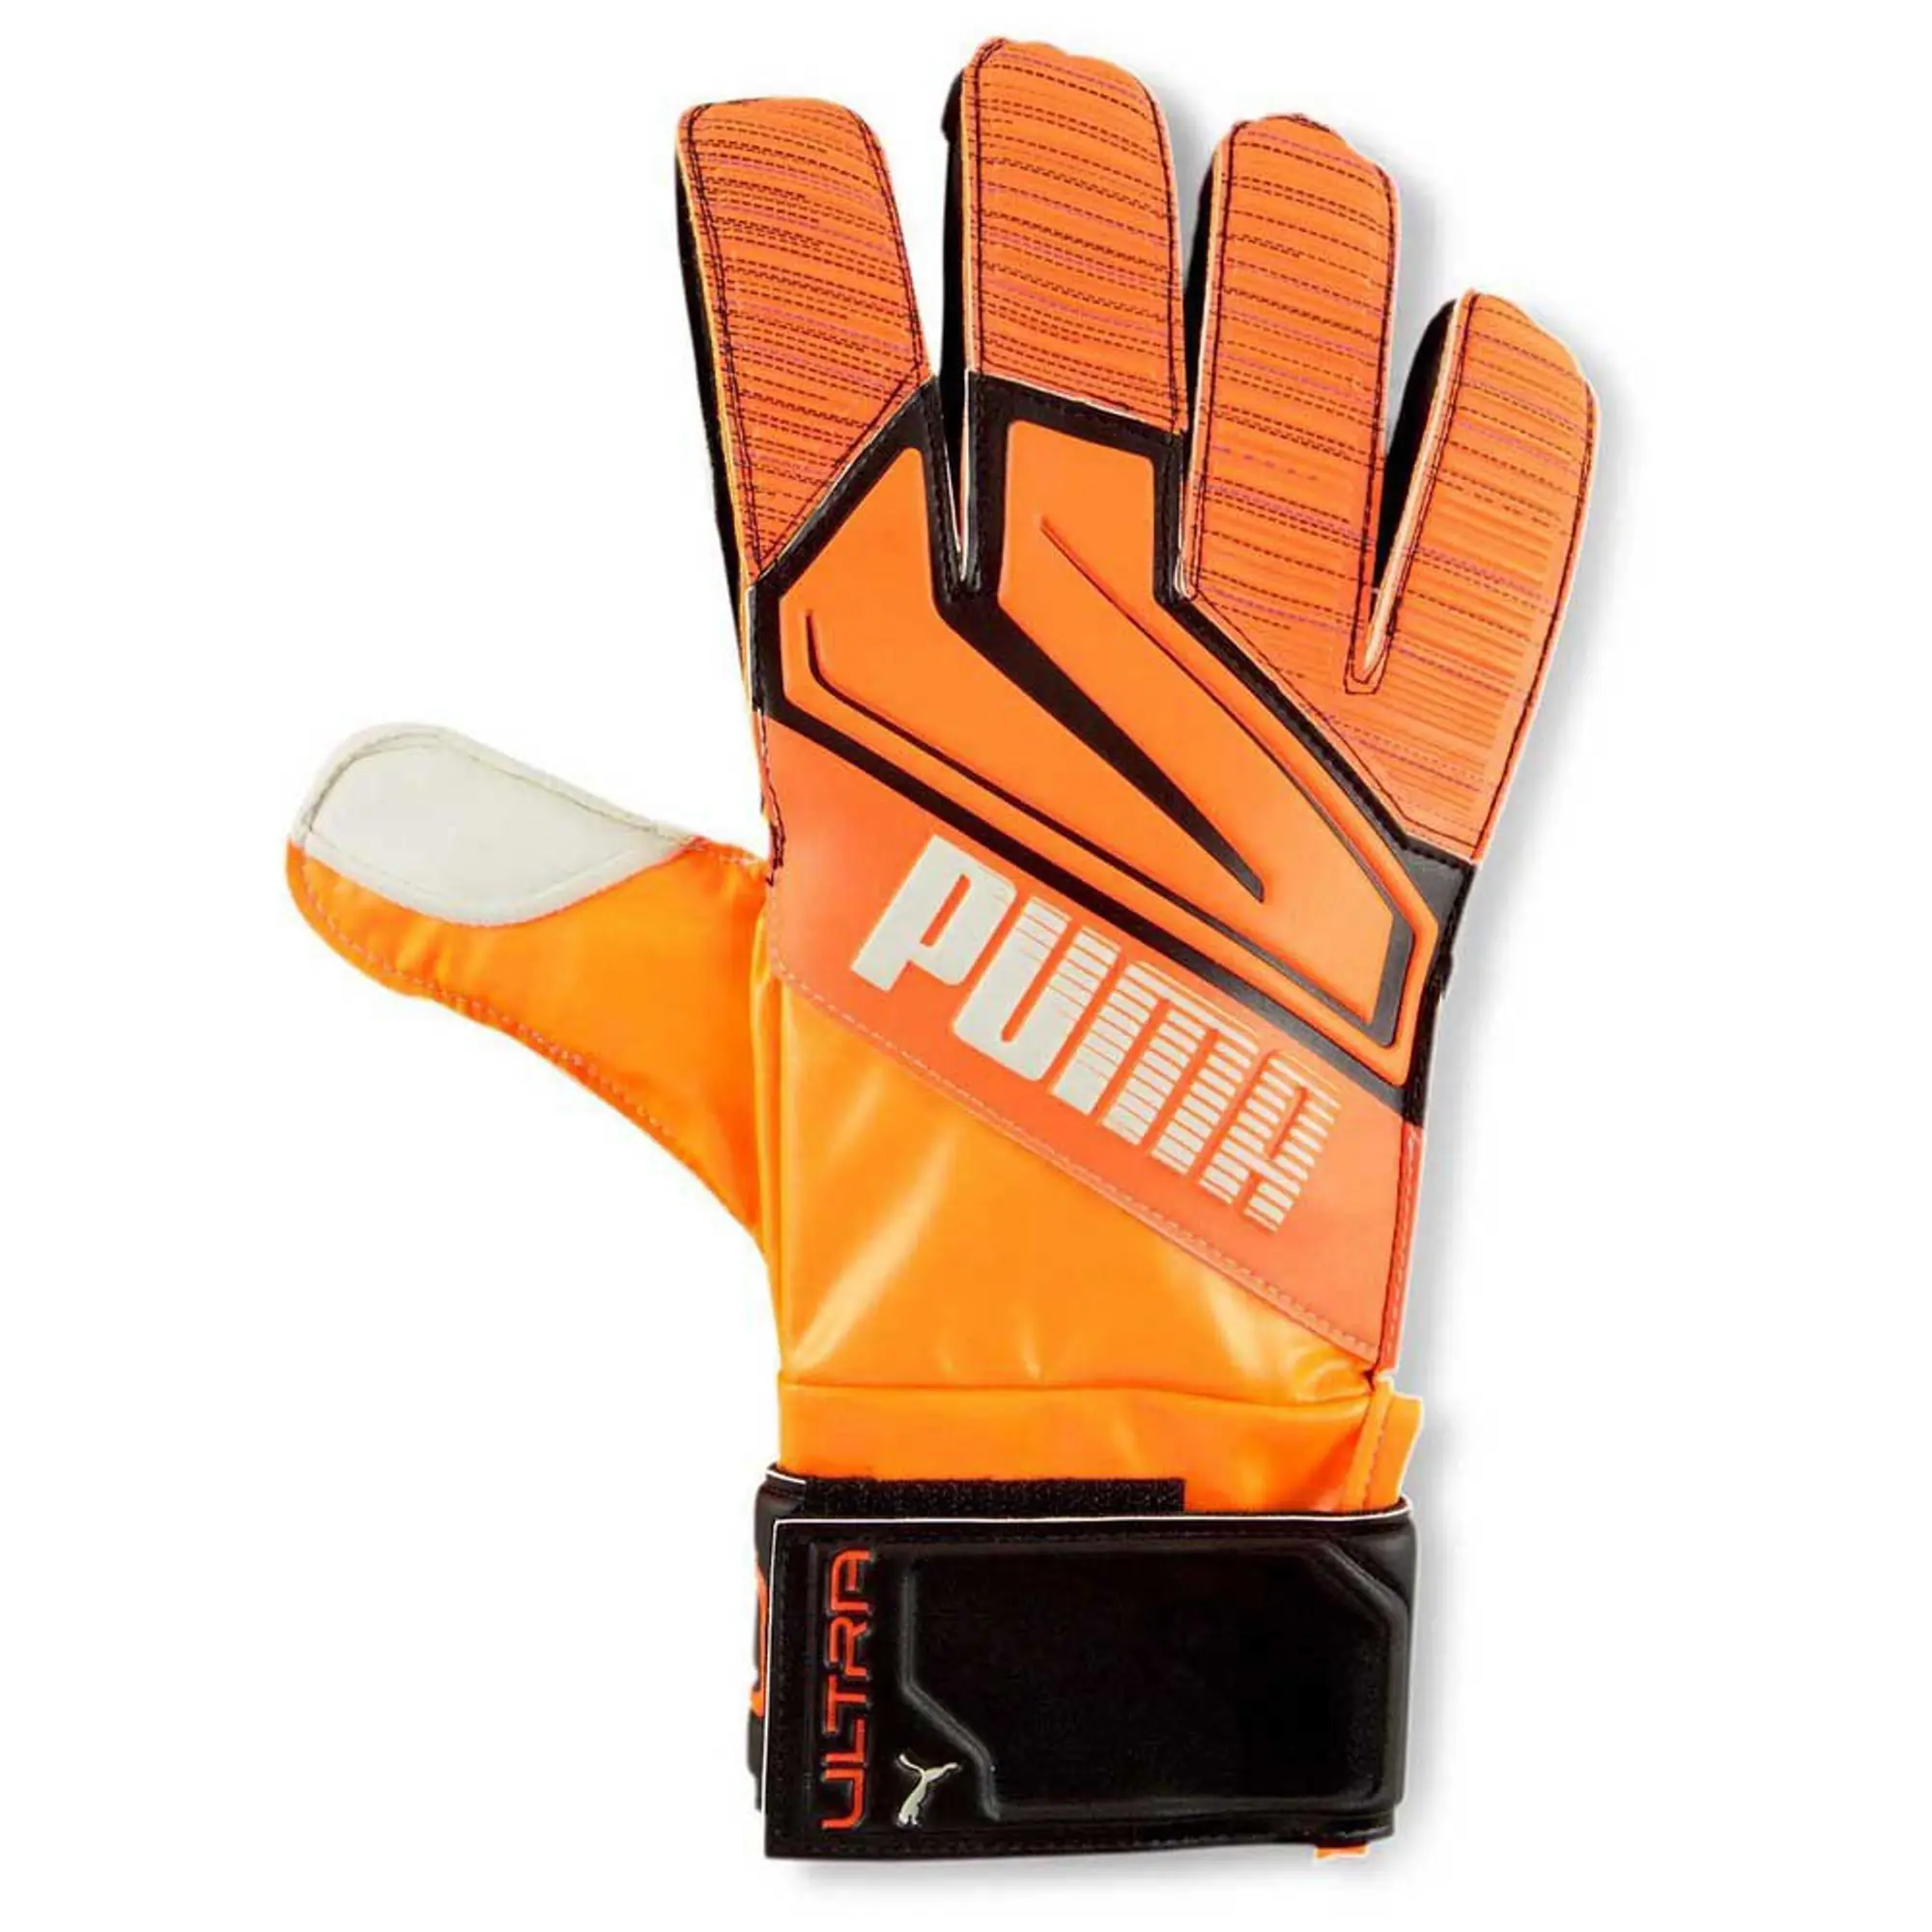 Puma Ultra Grip 3 Rc Chasing Adrenaline Pack Goalkeeper Gloves  - Orange,Black